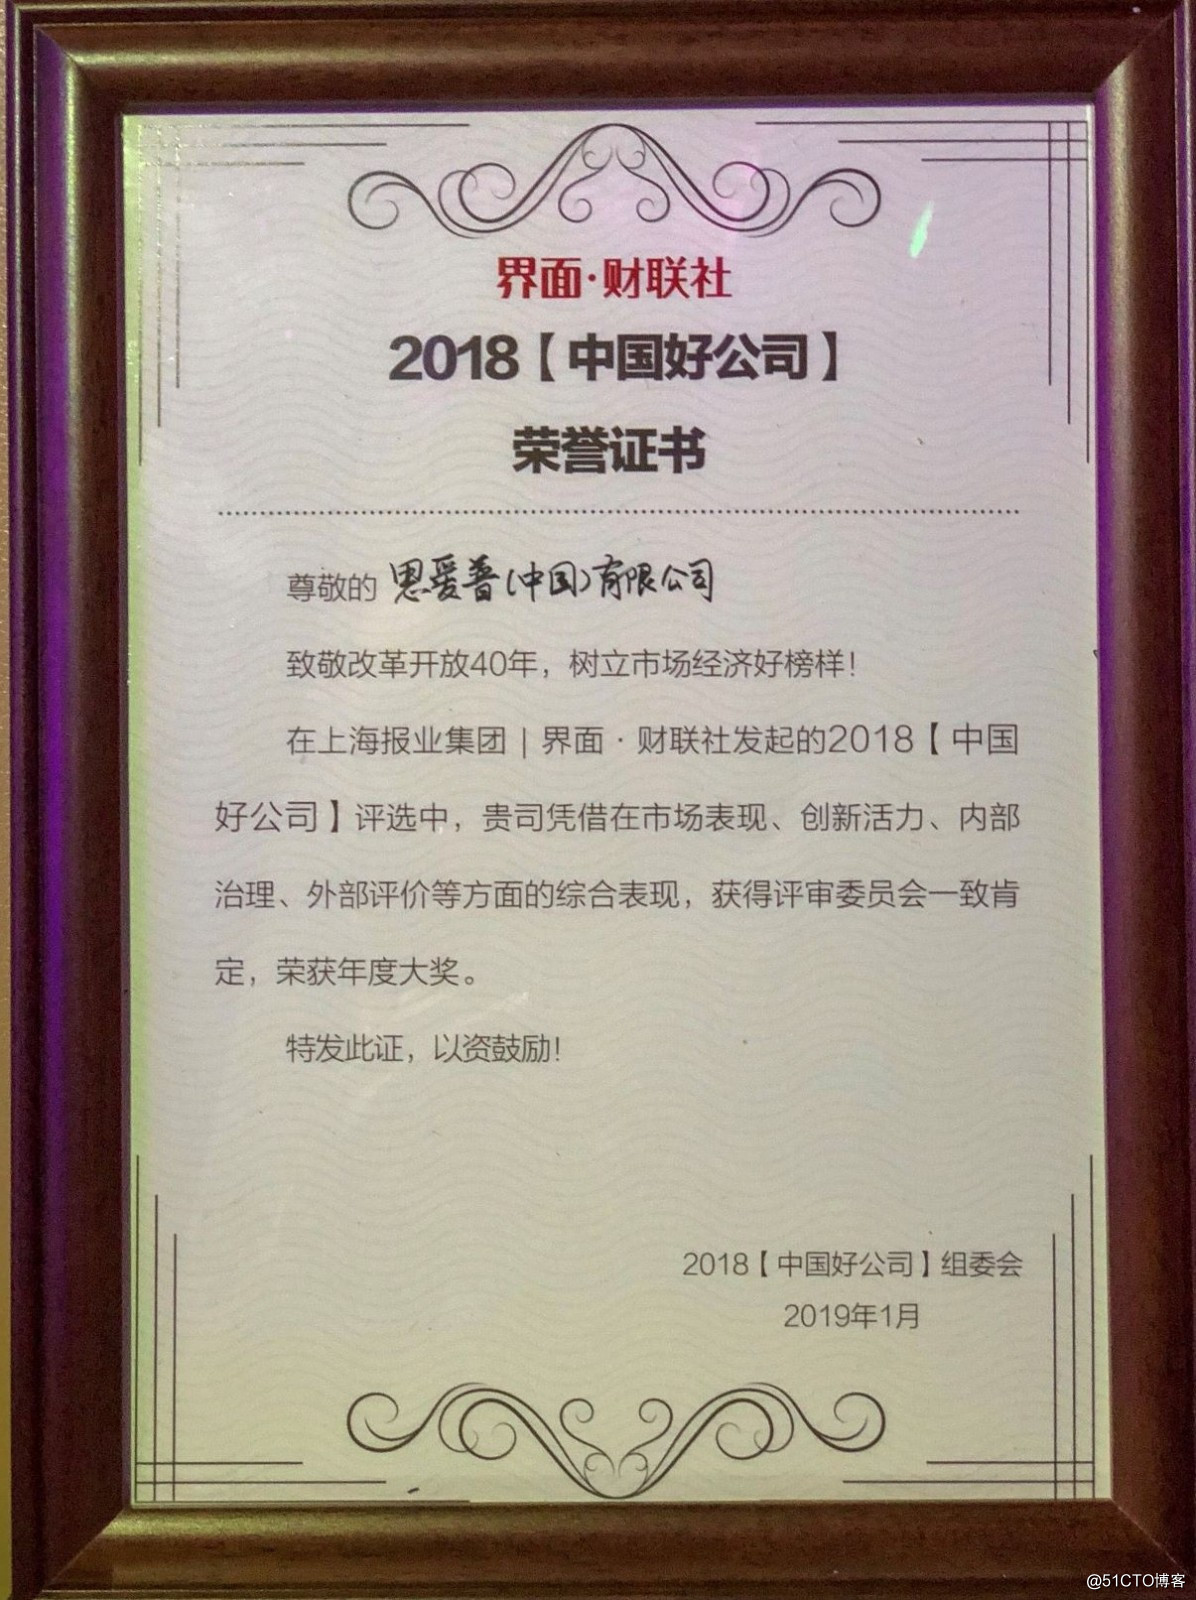 SAP 榮獲「中國好公司」頭銜